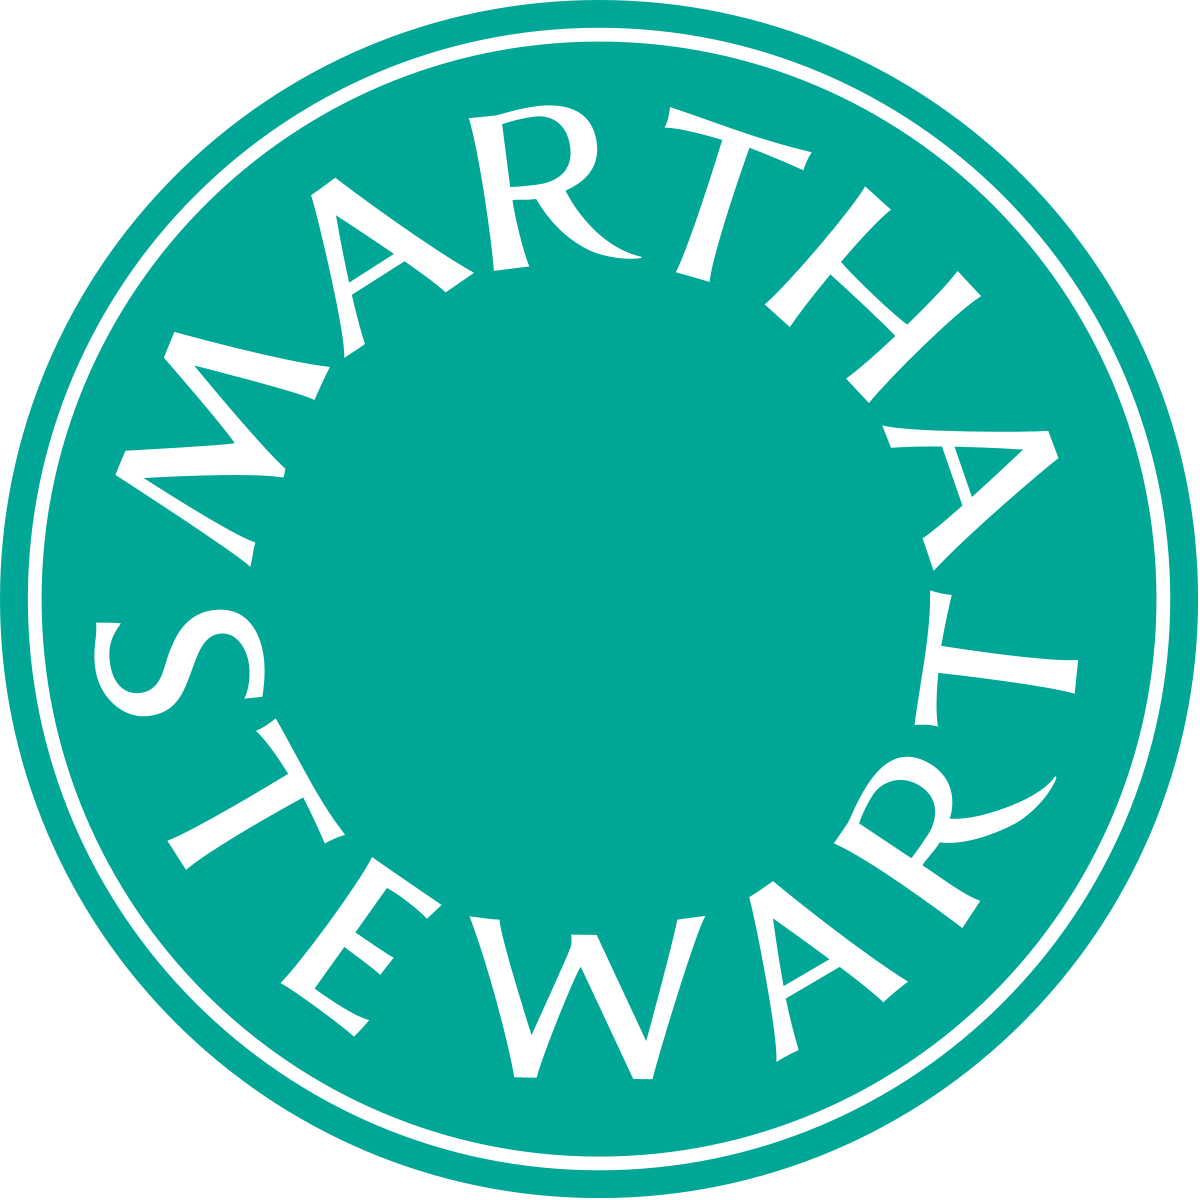 Stewart's Logo - Martha Stewart Living Omnimedia